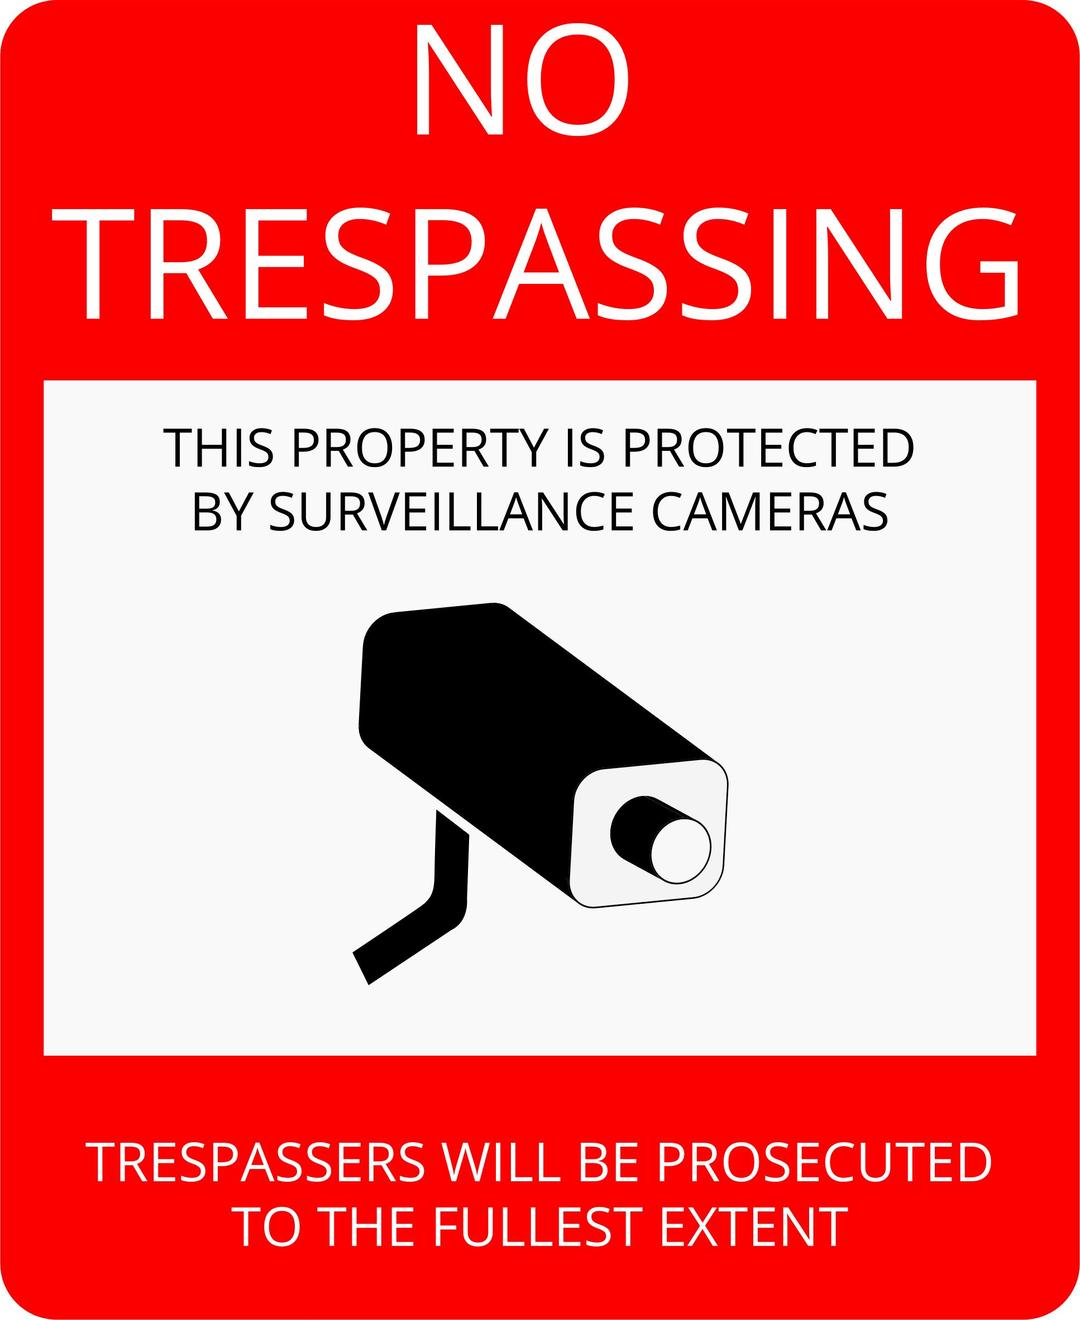 No Trespassing Sign (with camera warning) png transparent